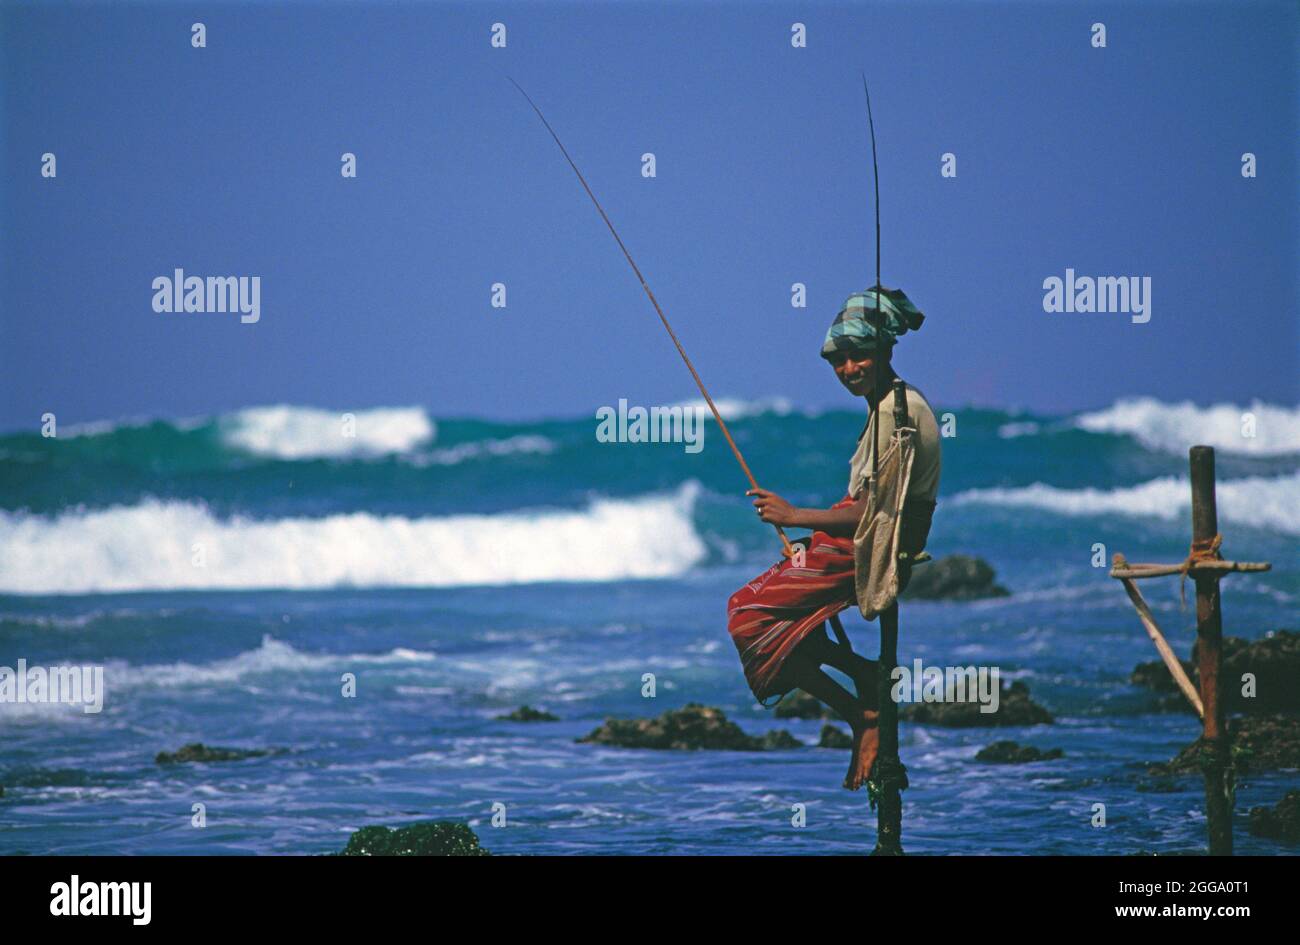 https://c8.alamy.com/comp/2GGA0T1/sri-lanka-galle-local-man-stilt-fishing-2GGA0T1.jpg